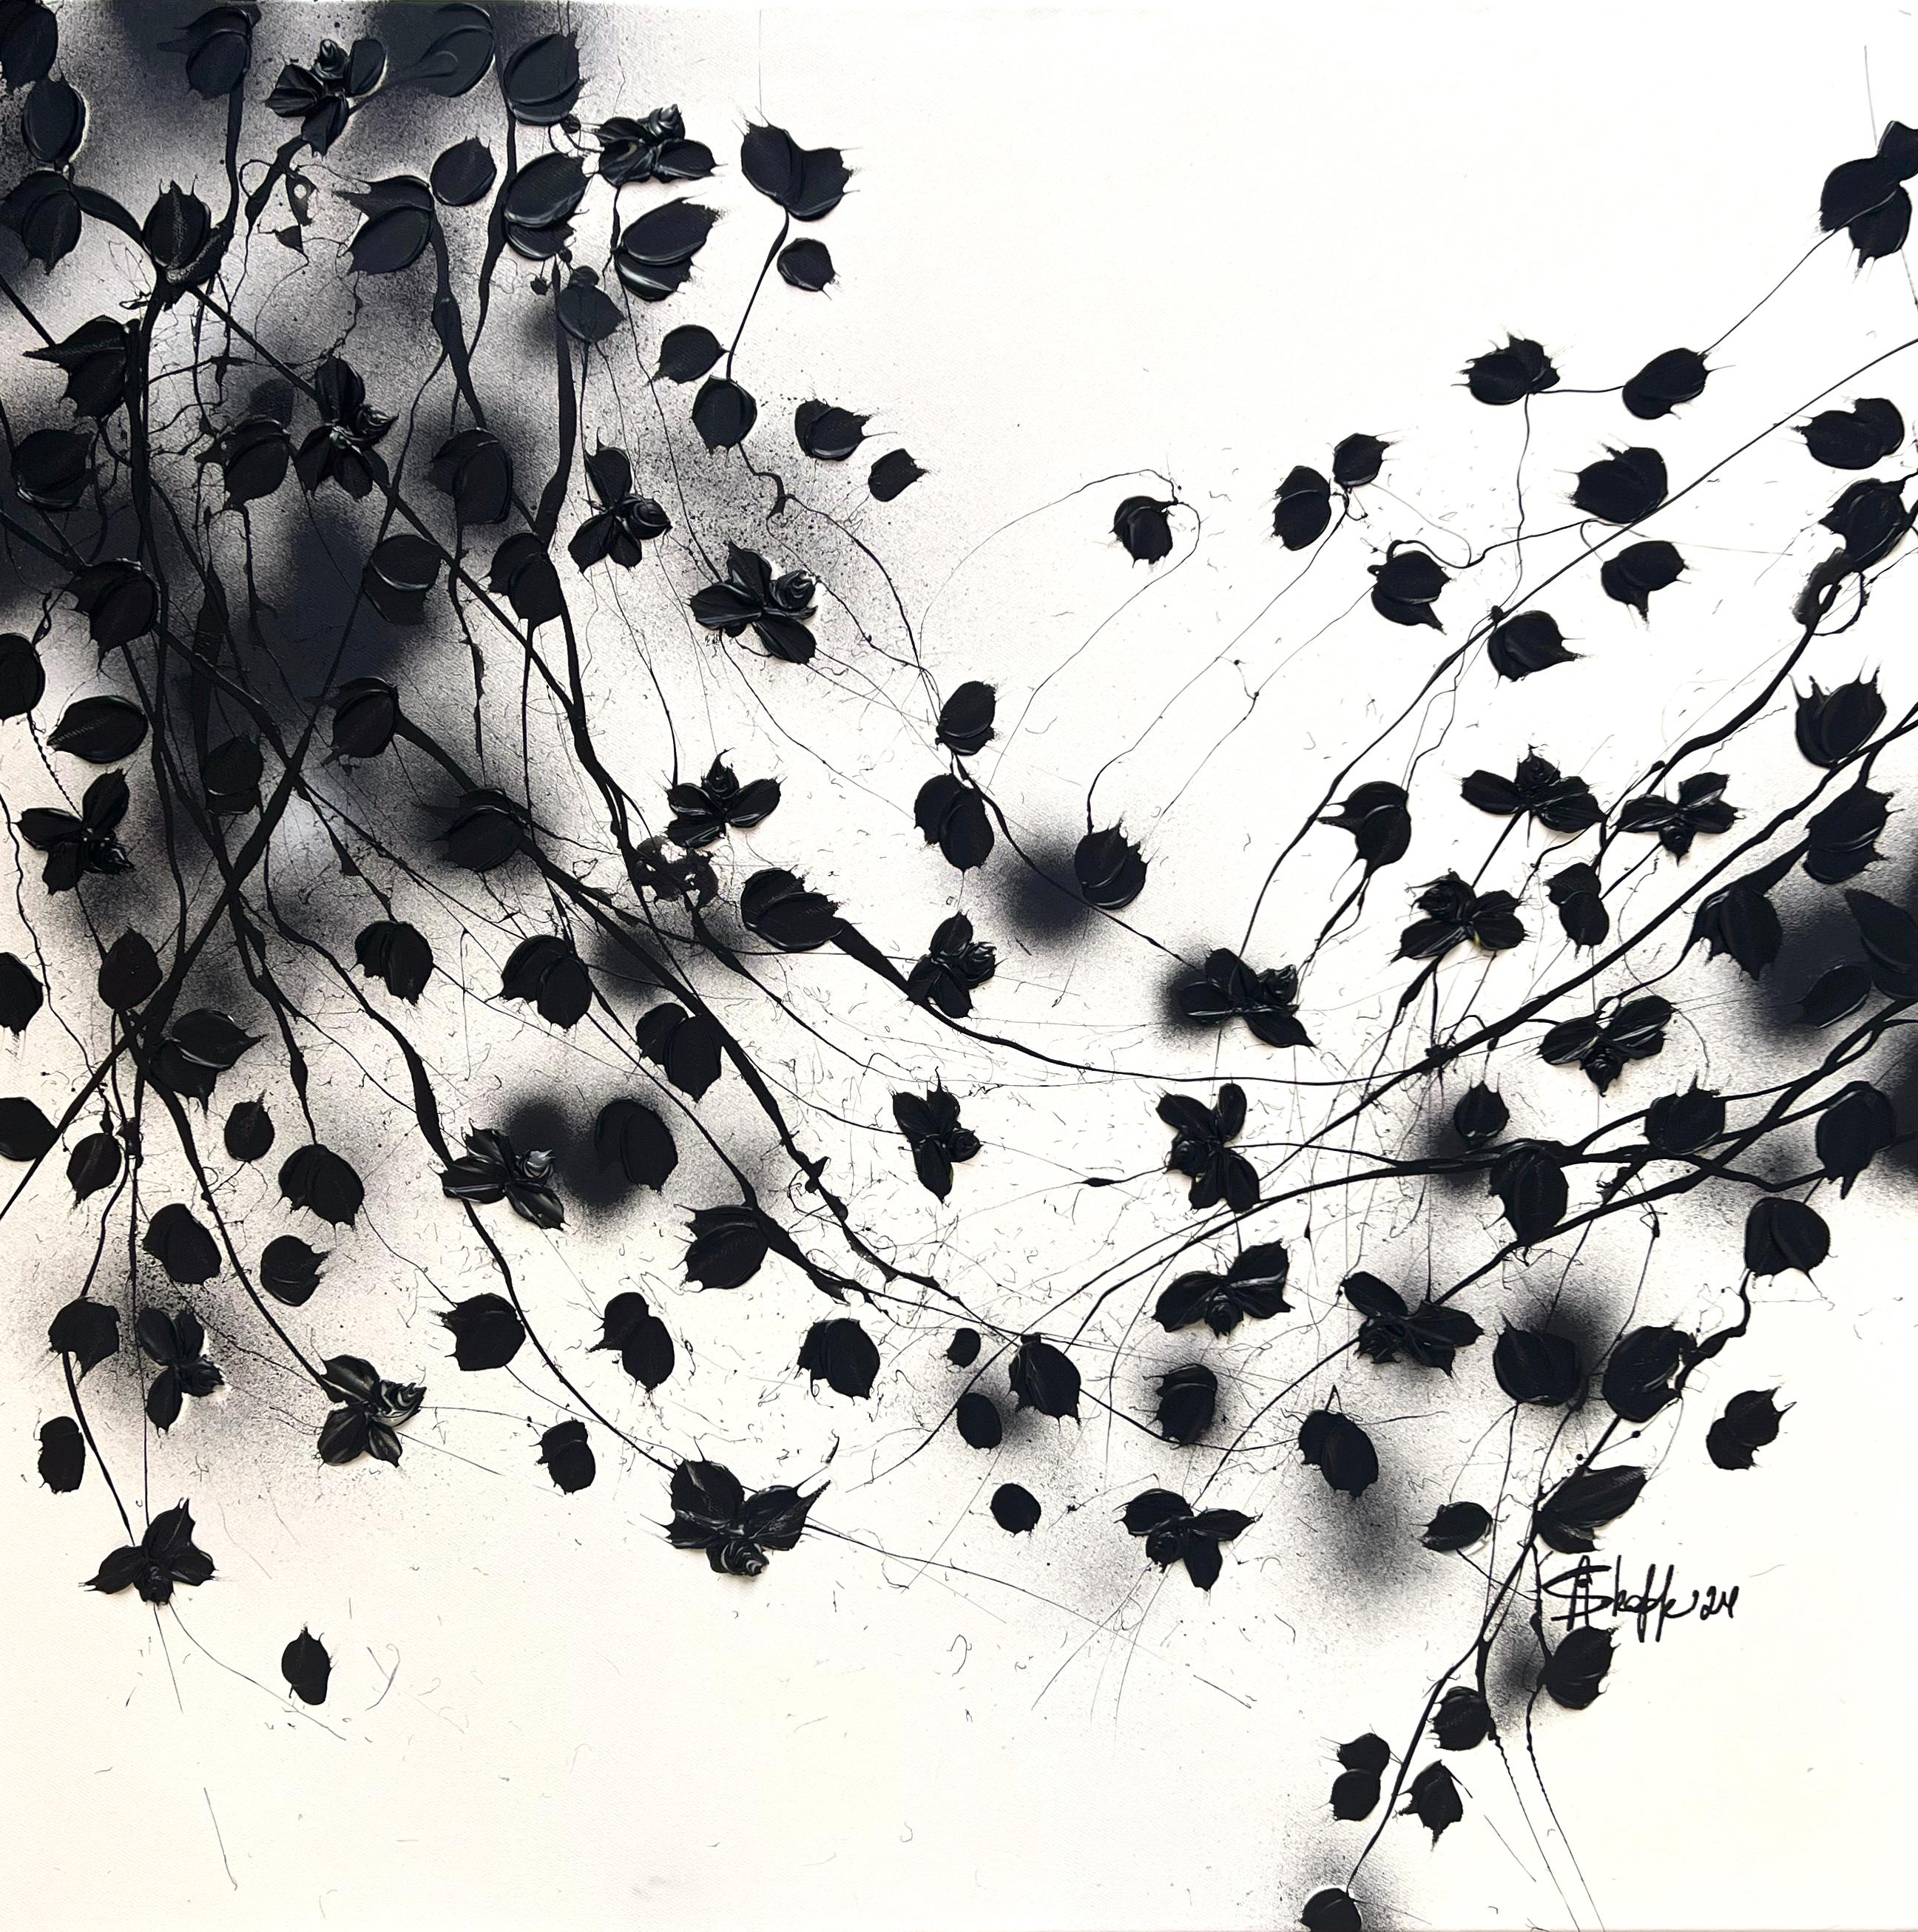 Abstract Painting Anastassia Skopp - "Monochrome Elegance" art noir et blanc